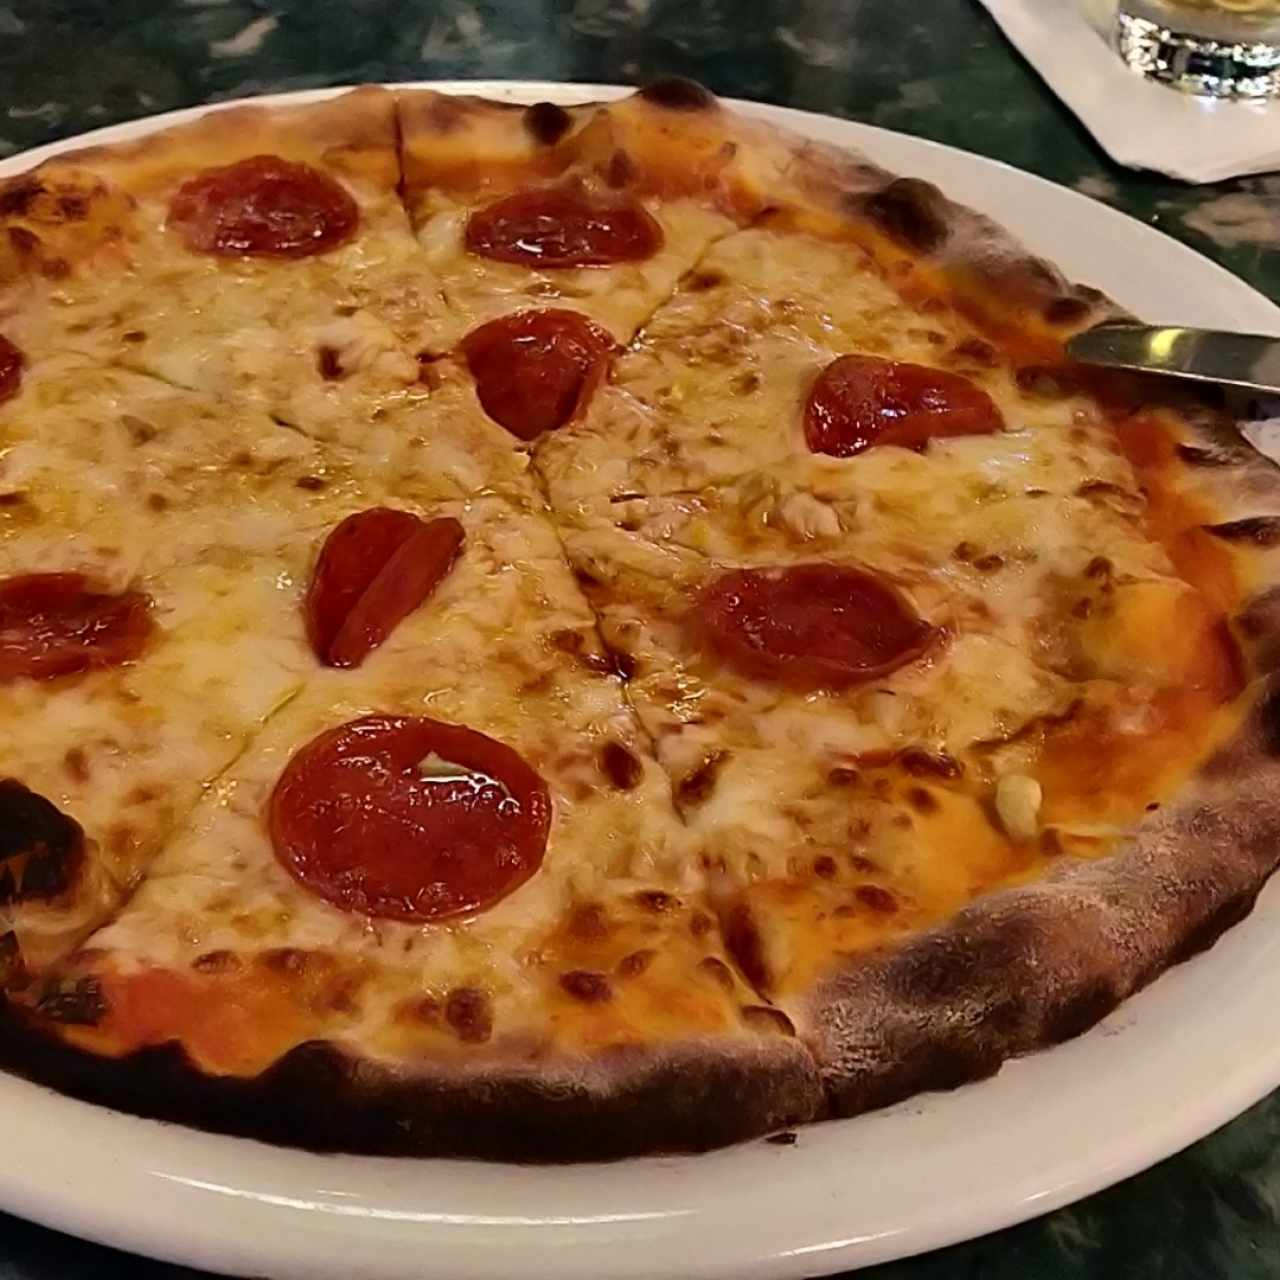 Pizza Pepperoni 